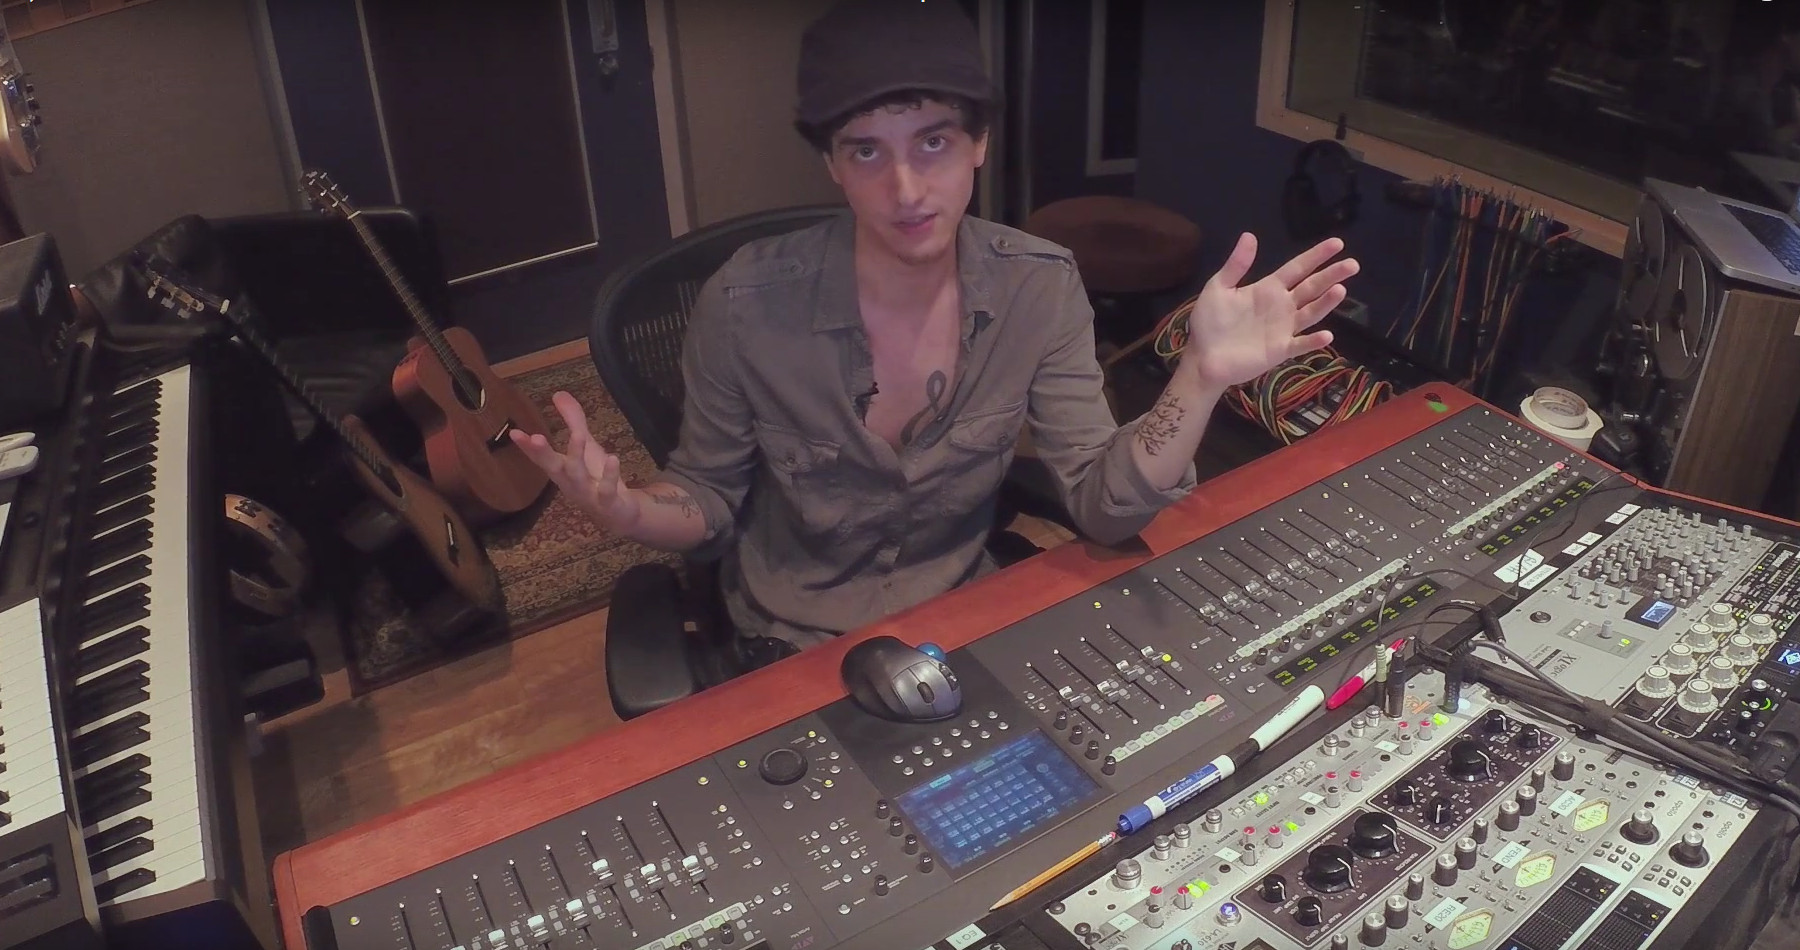 “Making the Mix” Video Tutorial II: Matty Amendola and “Blah Blah Blah”